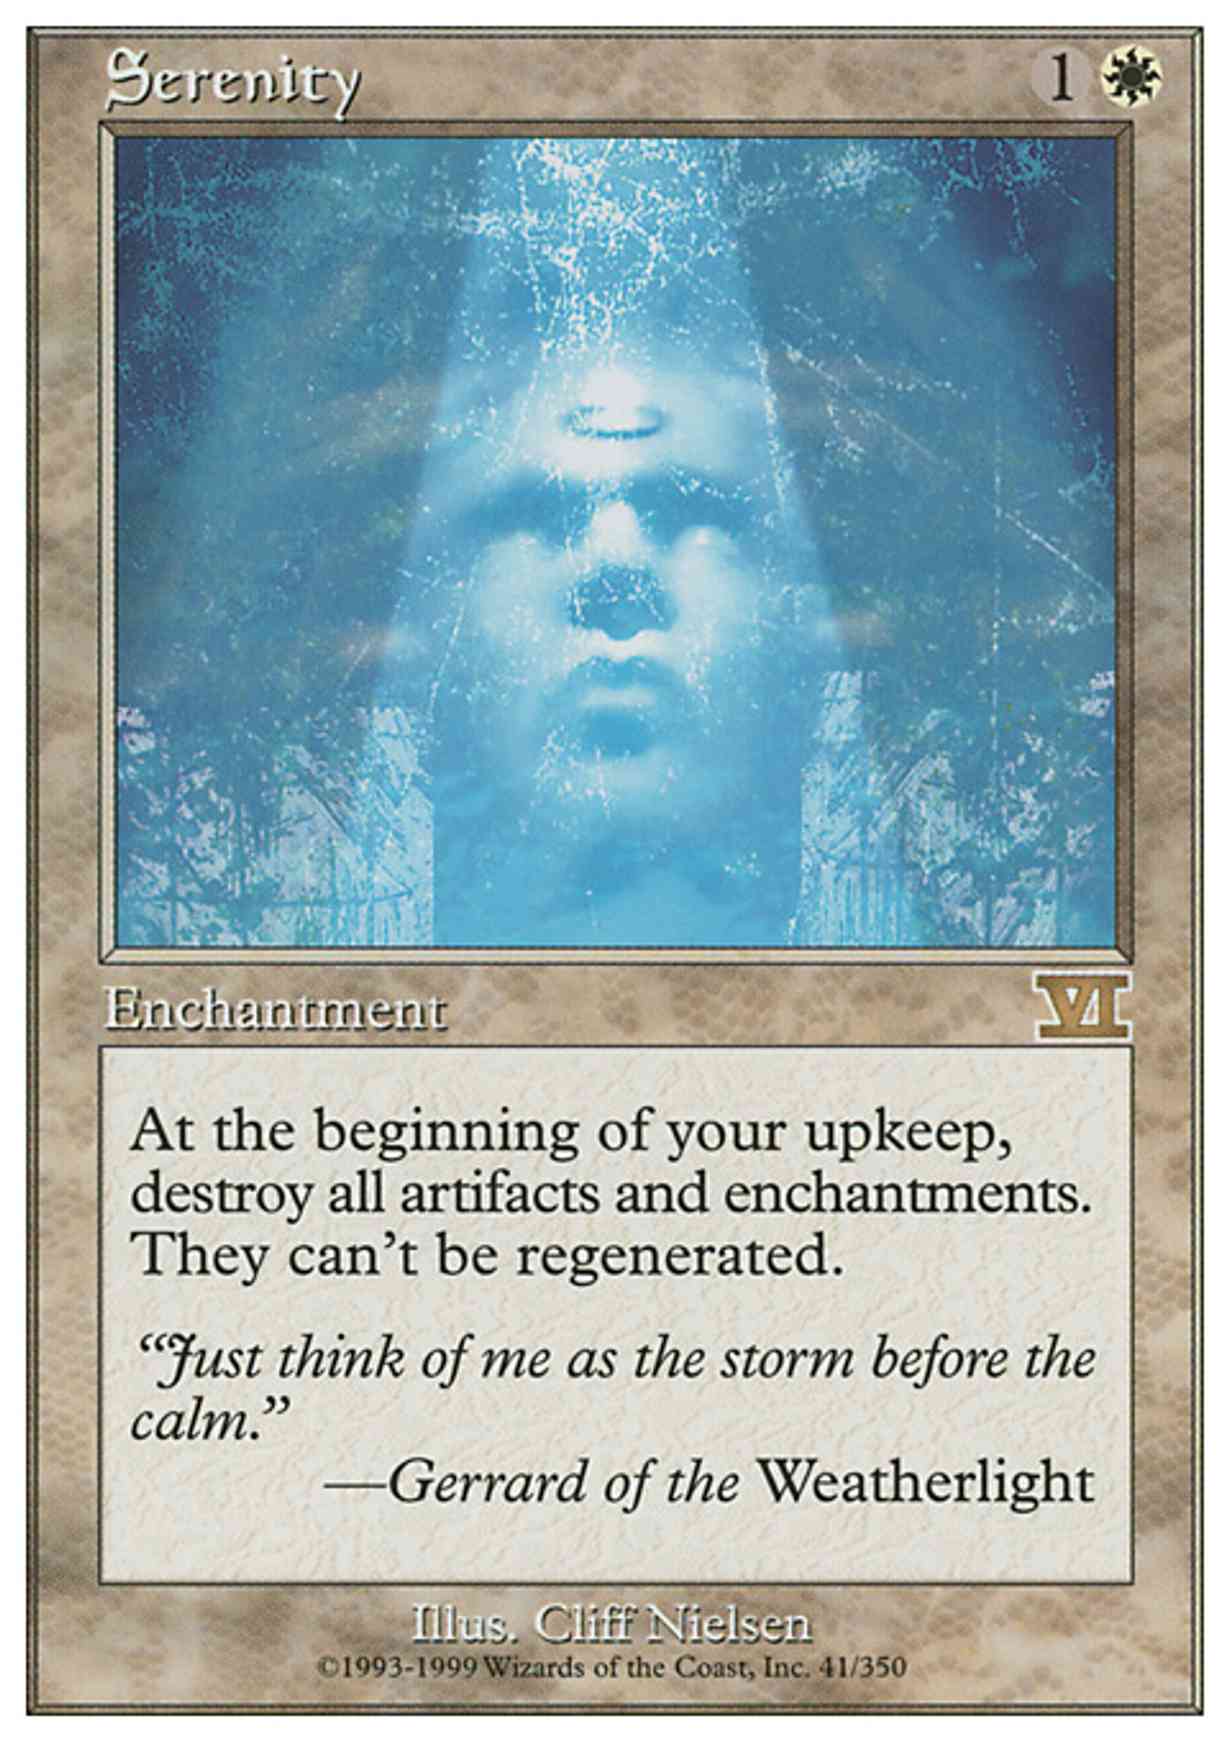 Serenity magic card front